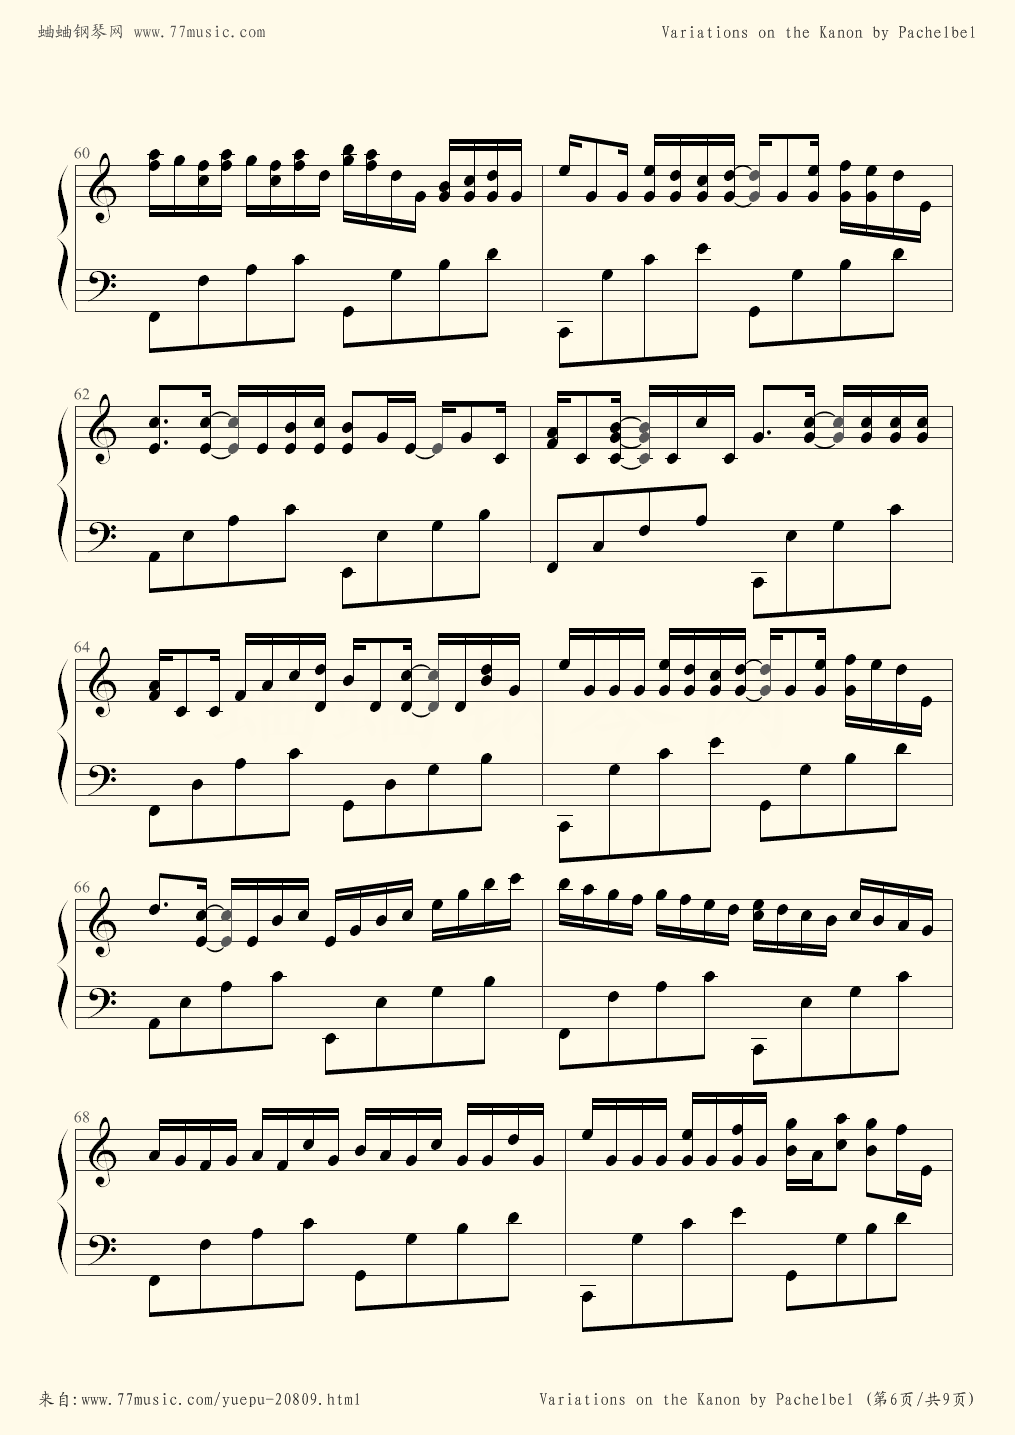 Variations on the Canon - Johann Pachelbel - Flash Piano Sheet Music Free